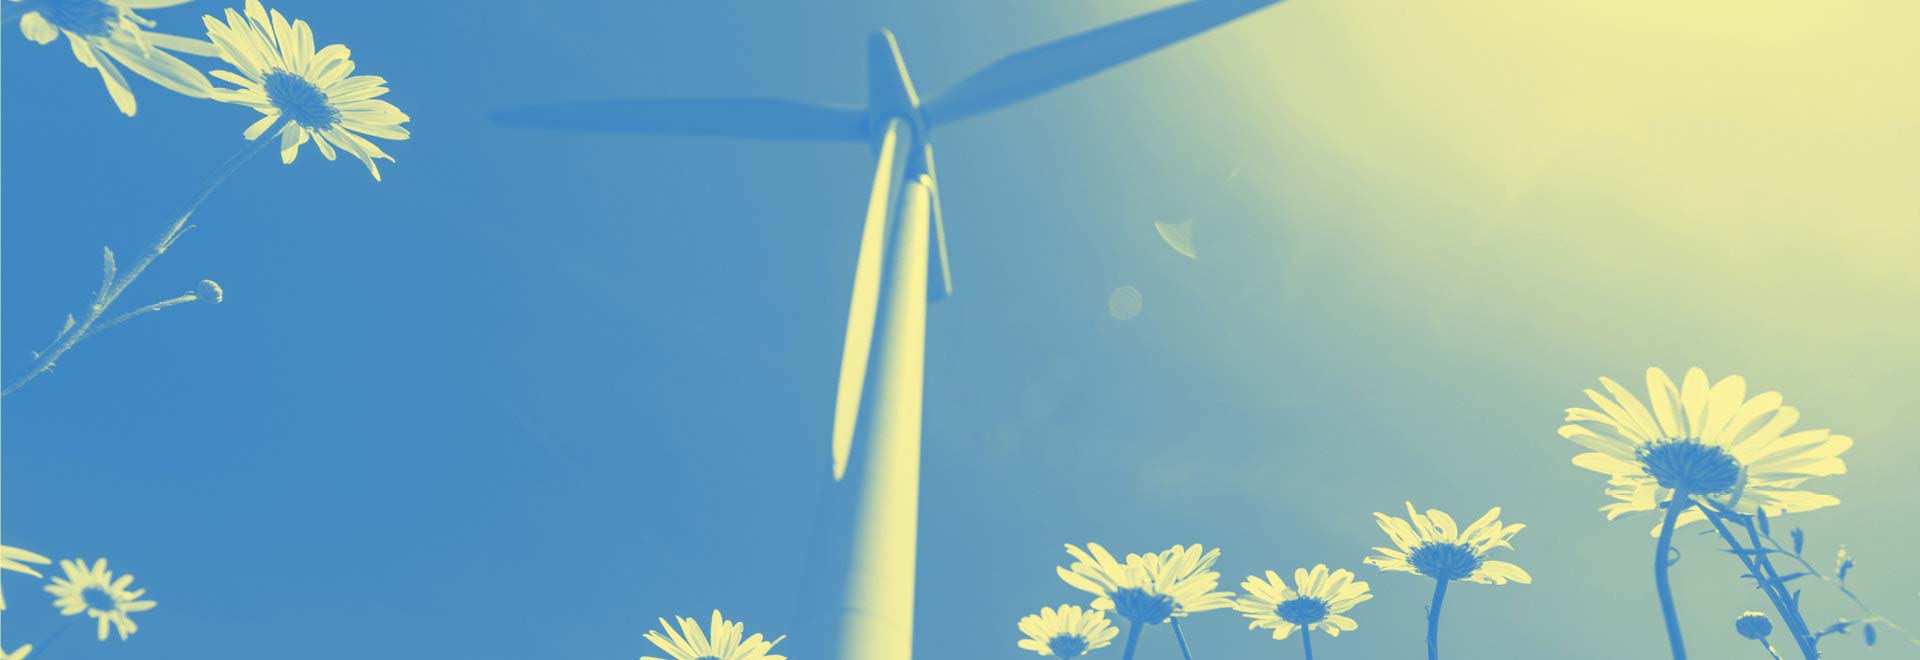 Wind turbine in field of daisies